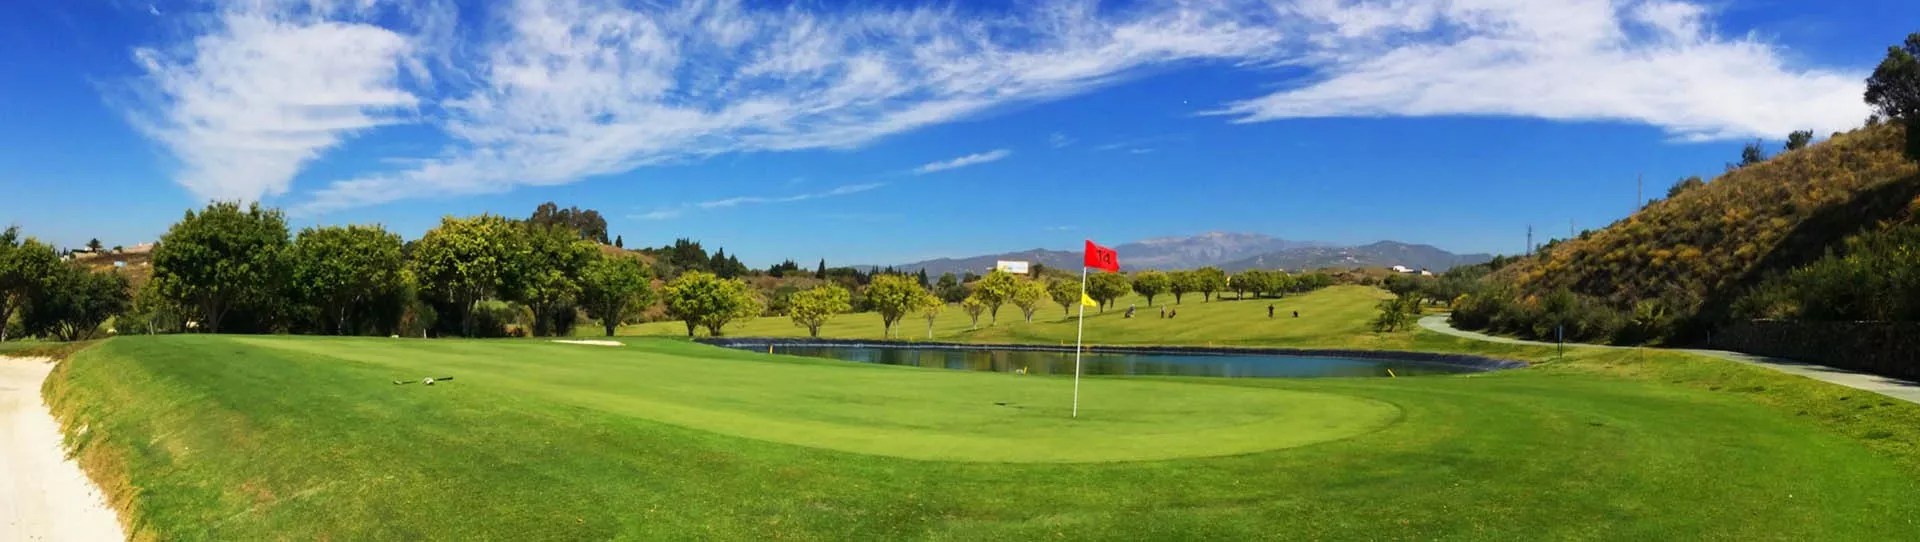 Spain golf courses - Baviera Golf Course - Photo 2